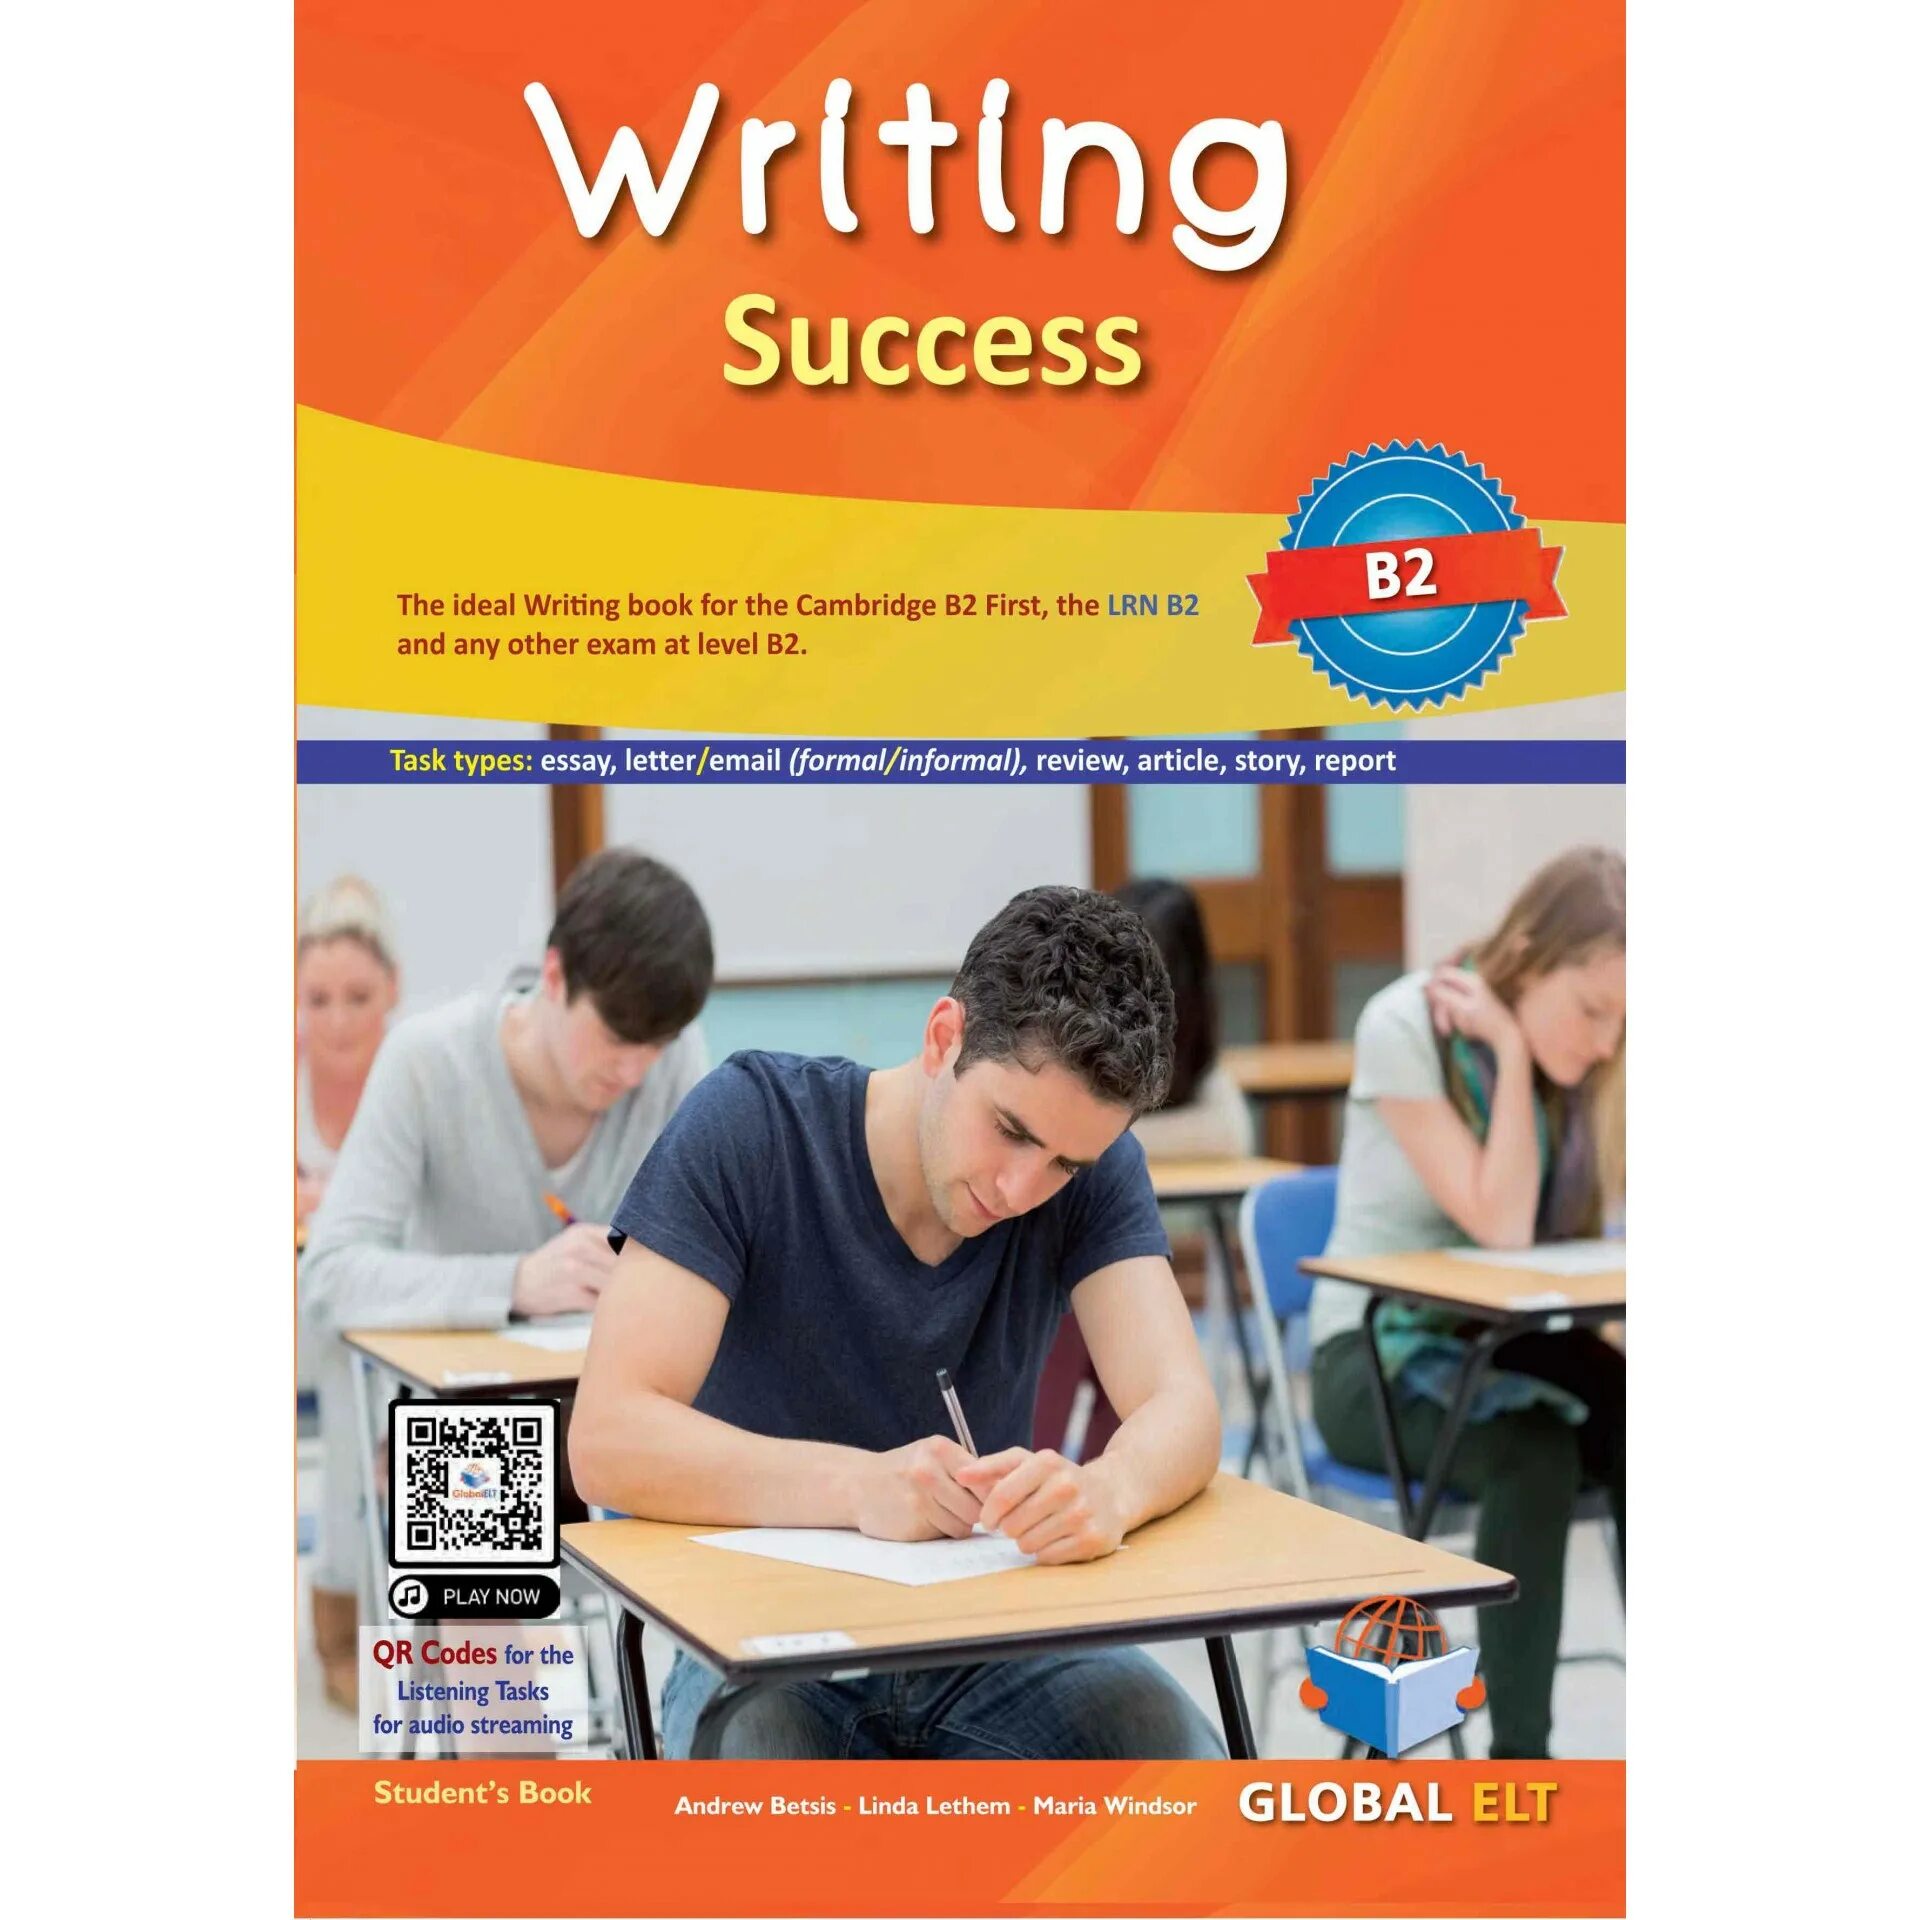 Students book b1 ответы. English book for reading b1 Level. Successful writing Upper-Intermediate. Cambridge b2 student's book. Учебник Кембридж b2.